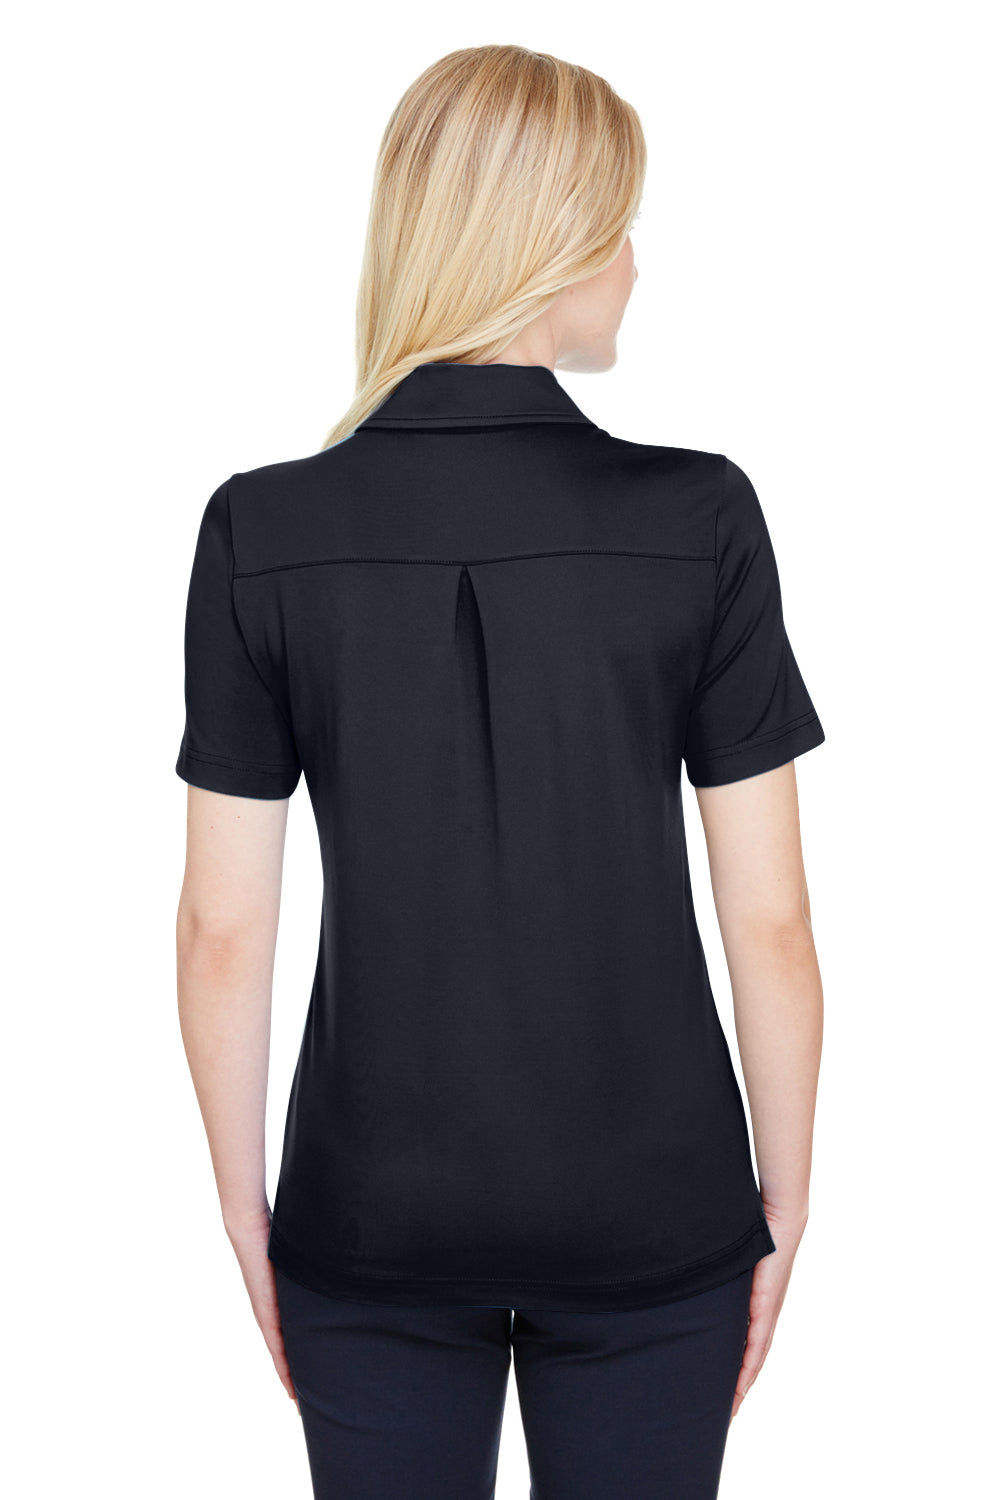 Devon & Jones DG21W Womens CrownLux Range Flex Performance Moisture Wicking Short Sleeve Polo Shirt Black Back